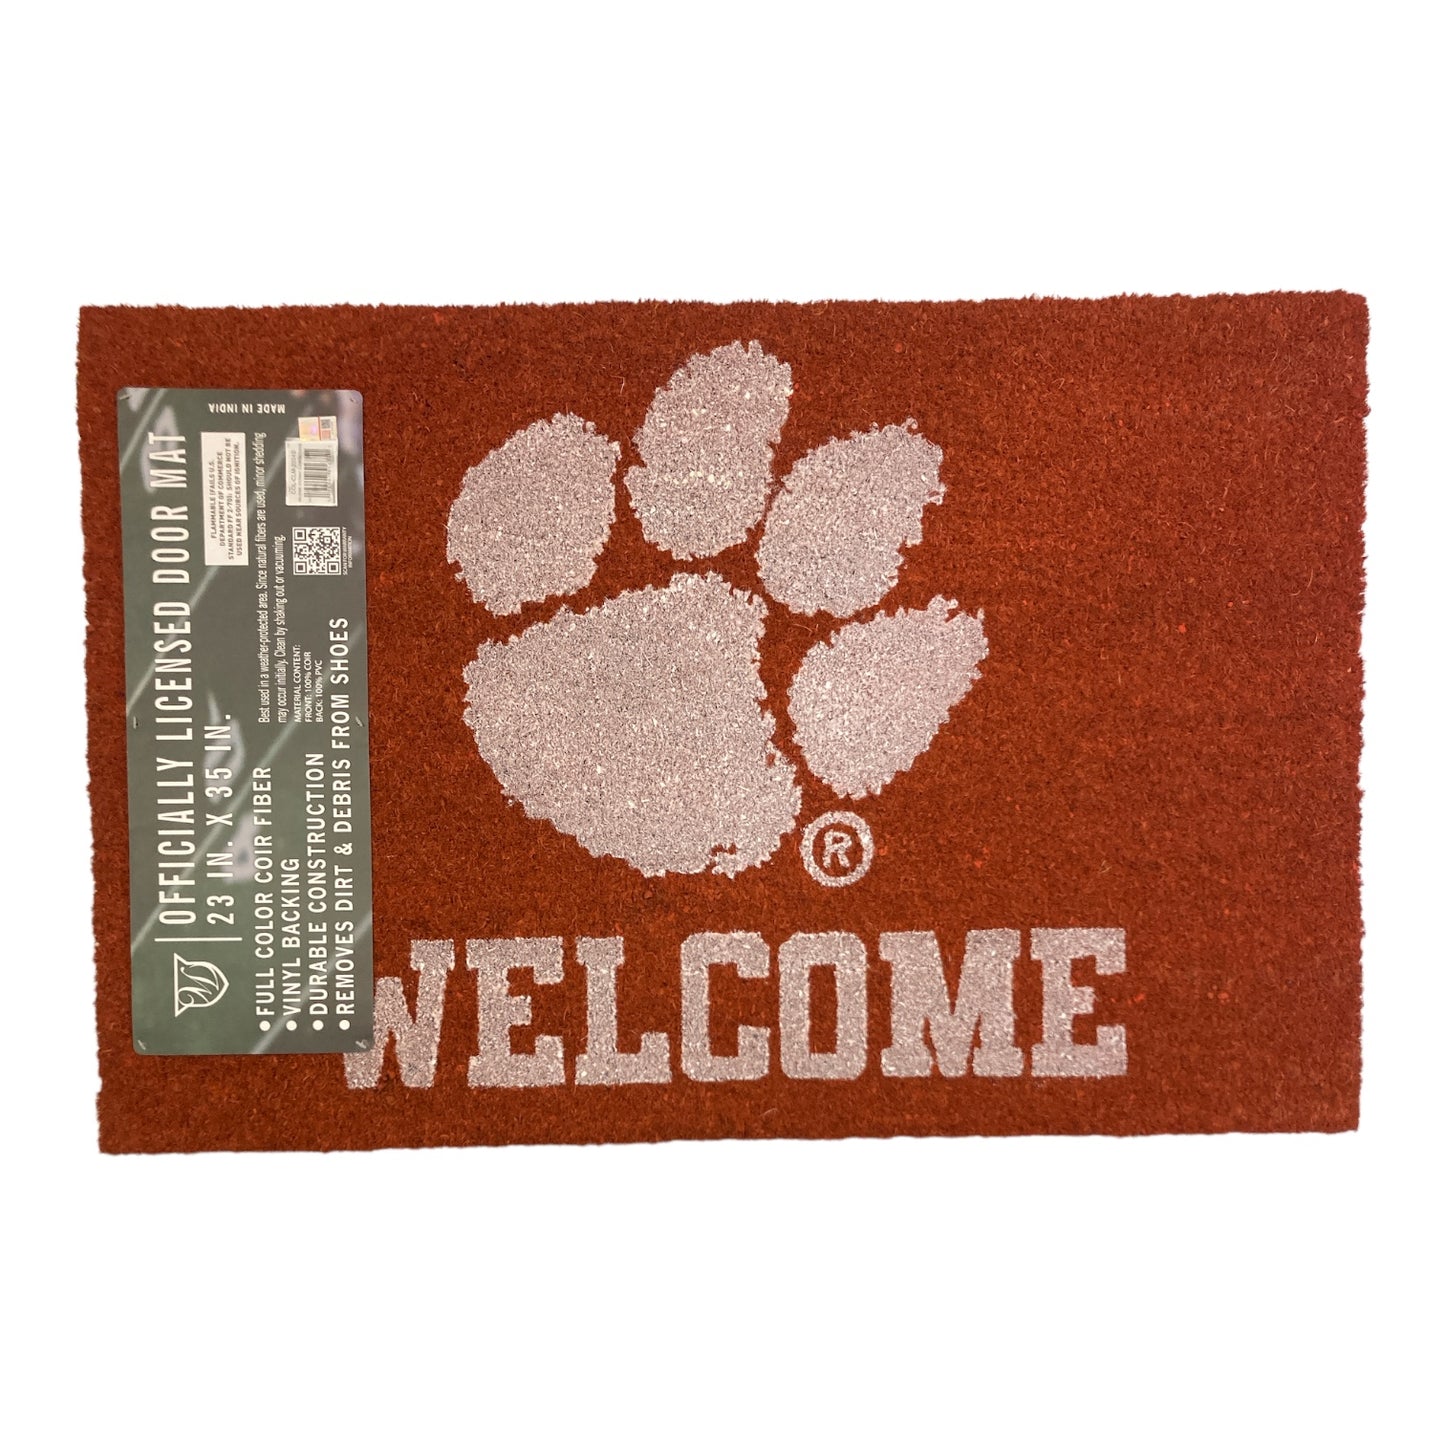 Officially Licensed NCAA Coir Fiber Welcome Door Mat, Clemson Tigers 23"x35"